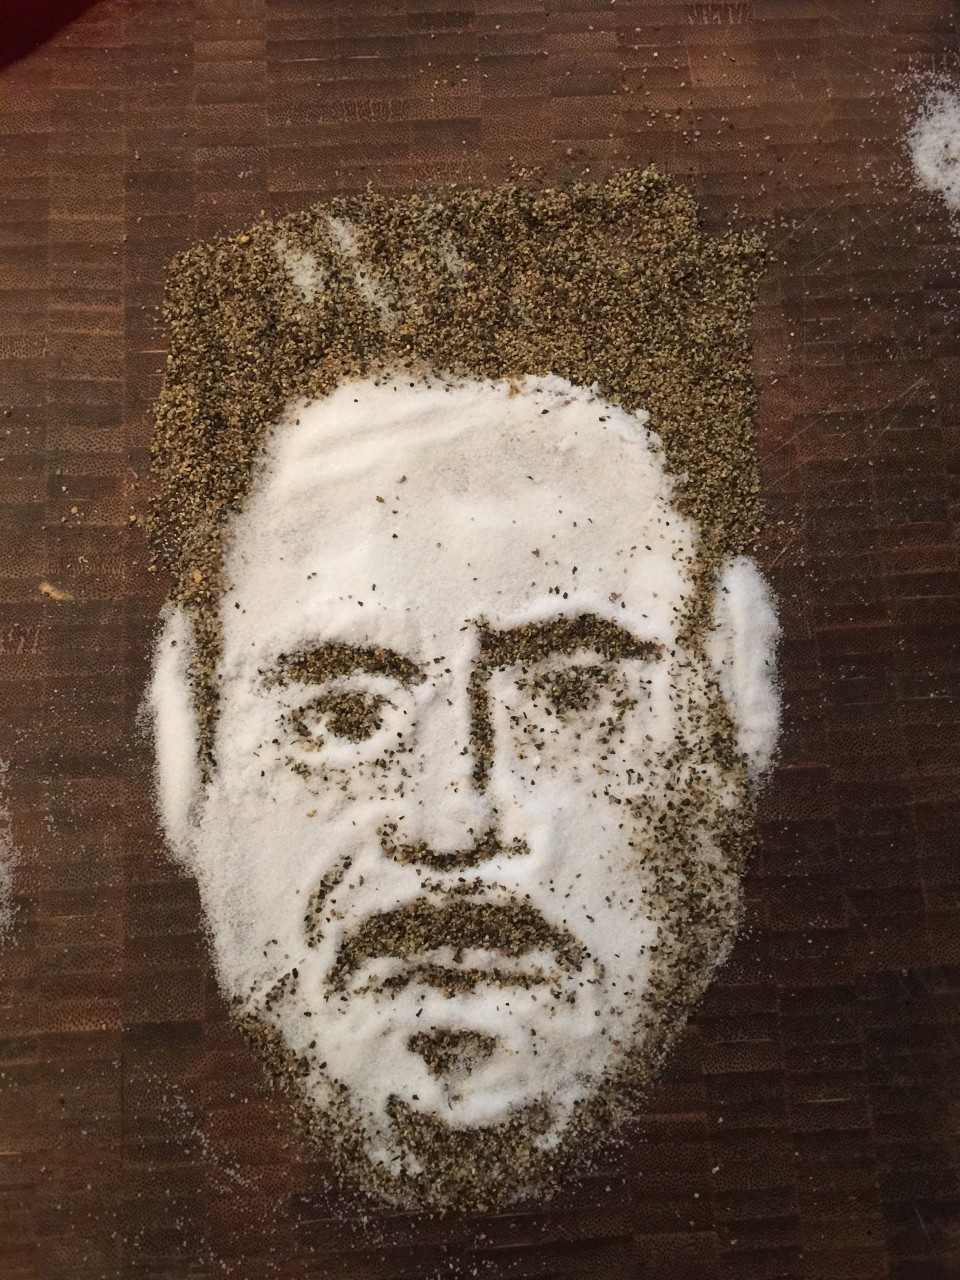 Портрет Роберта Дауни из соли и перца интересное, фото